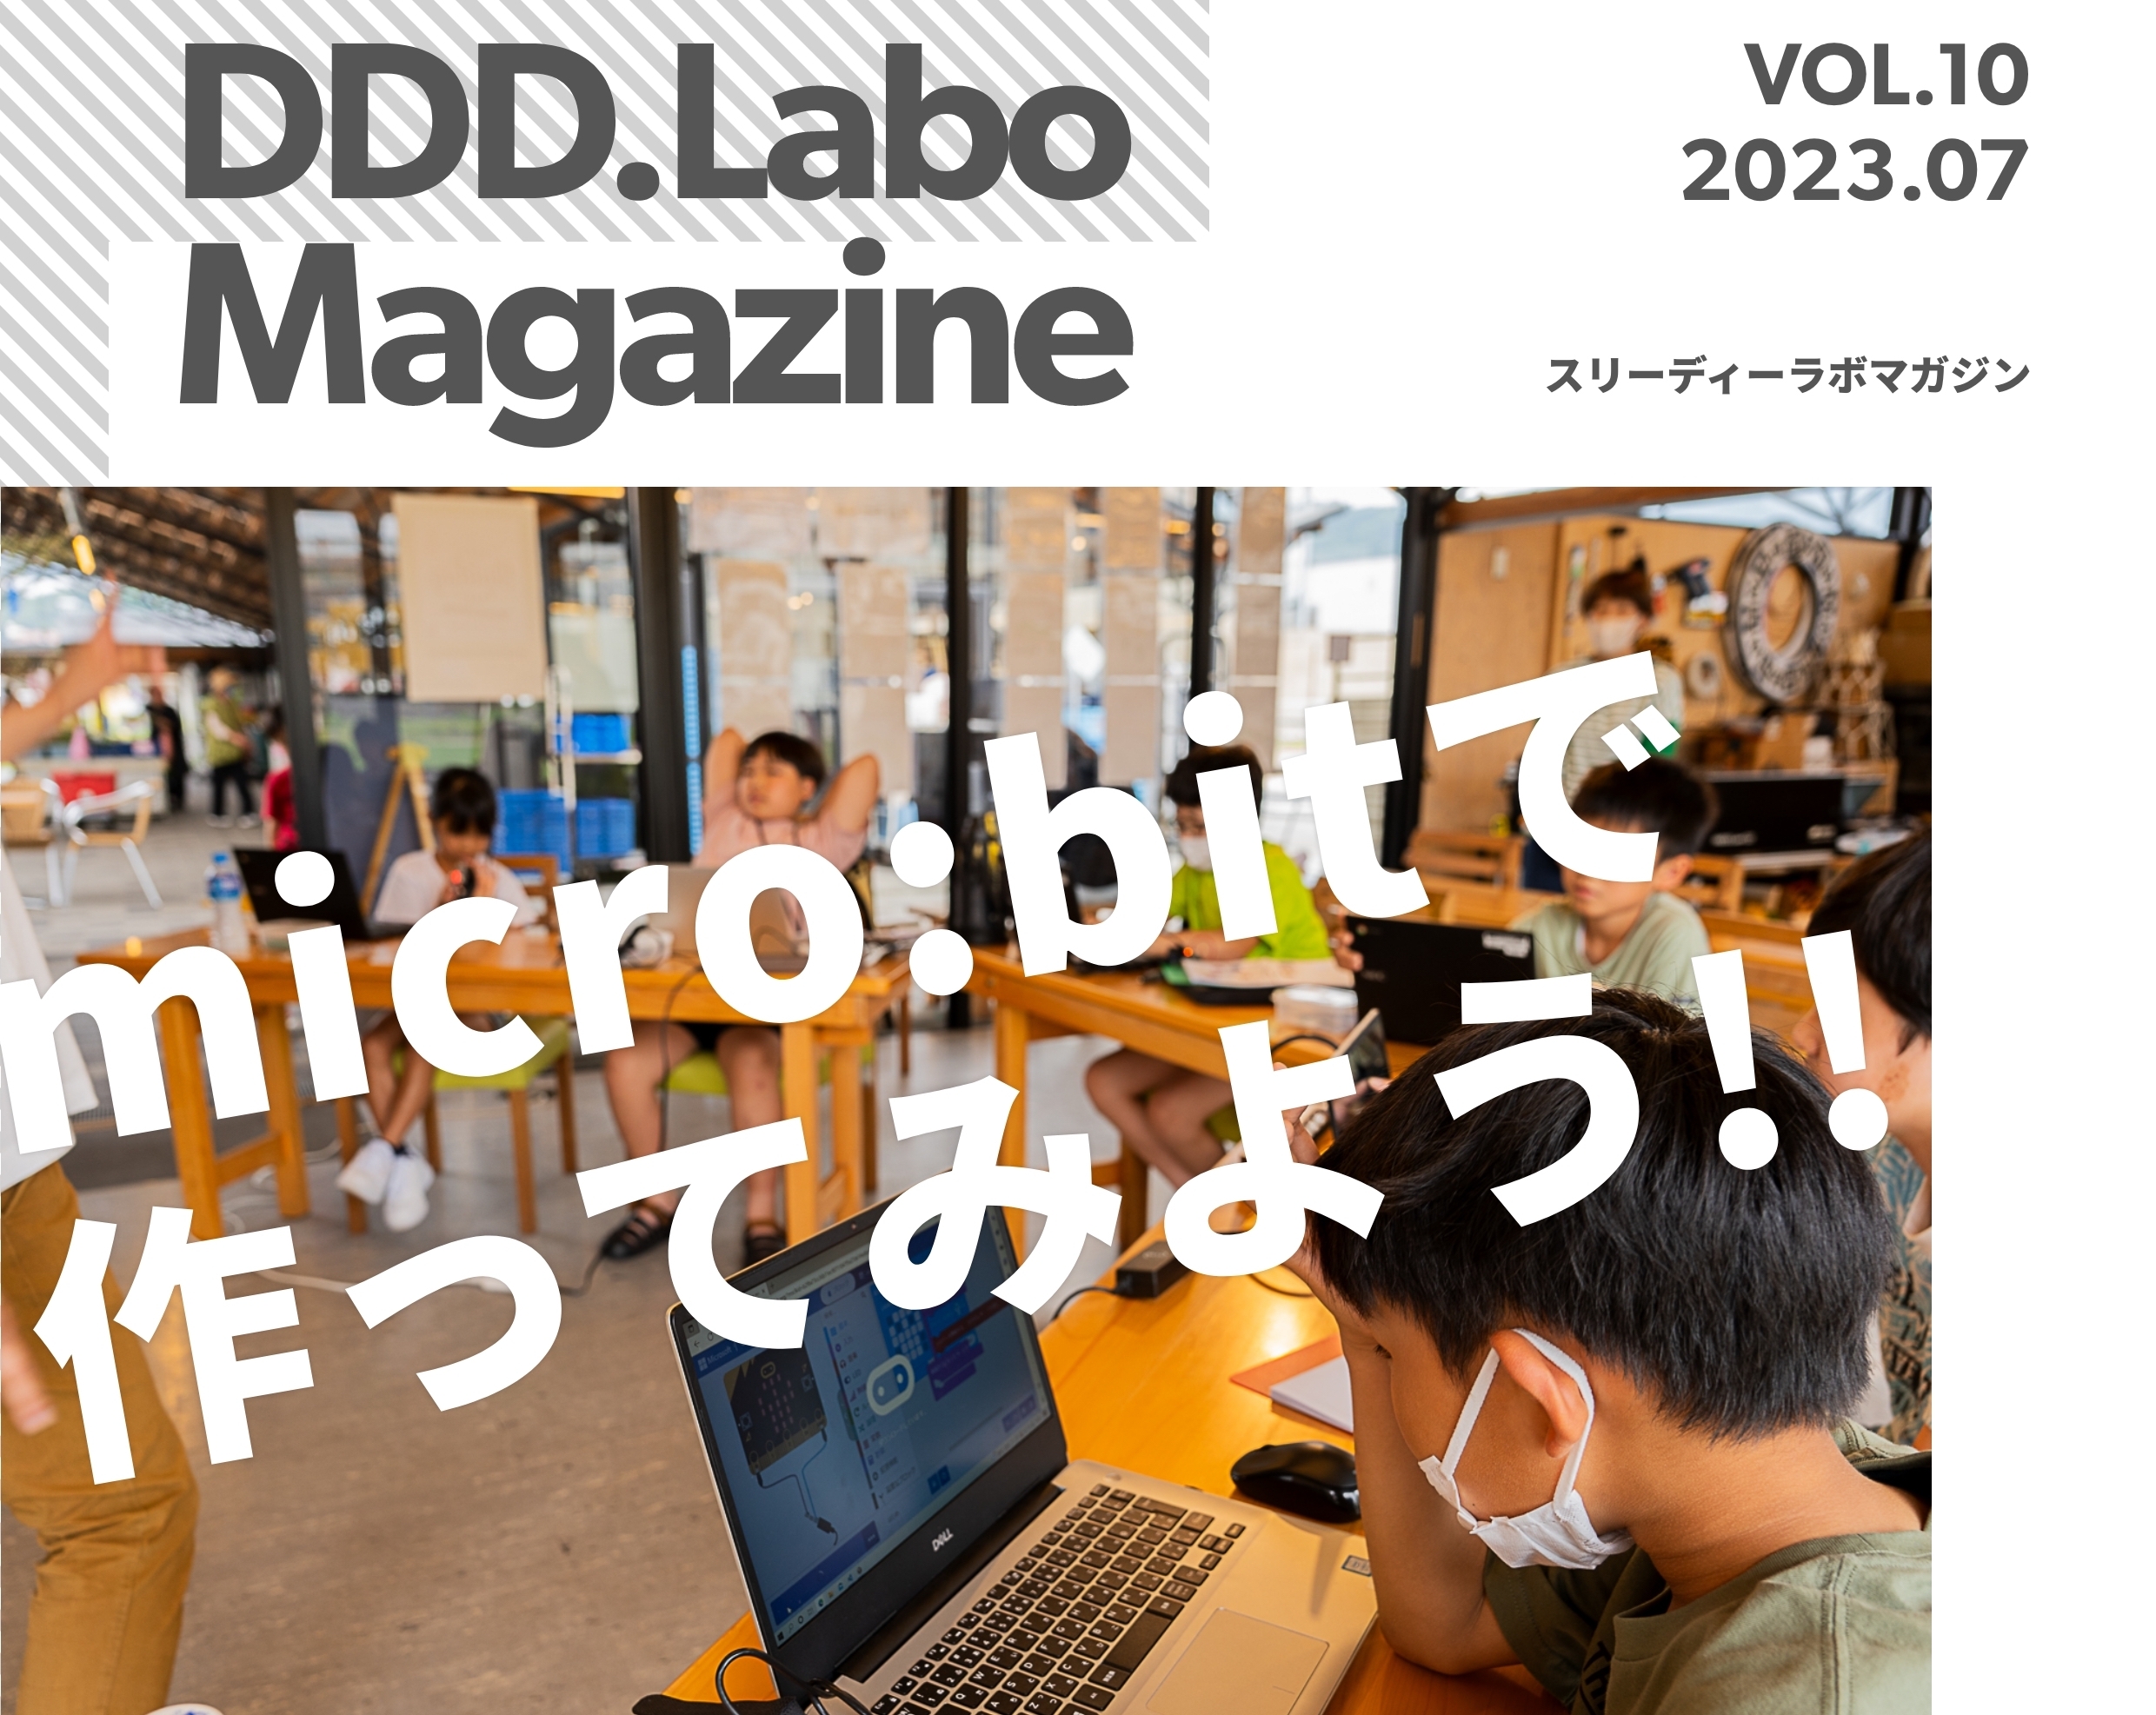 「DDD.Labo Magazine Vol.10発行！」の画像